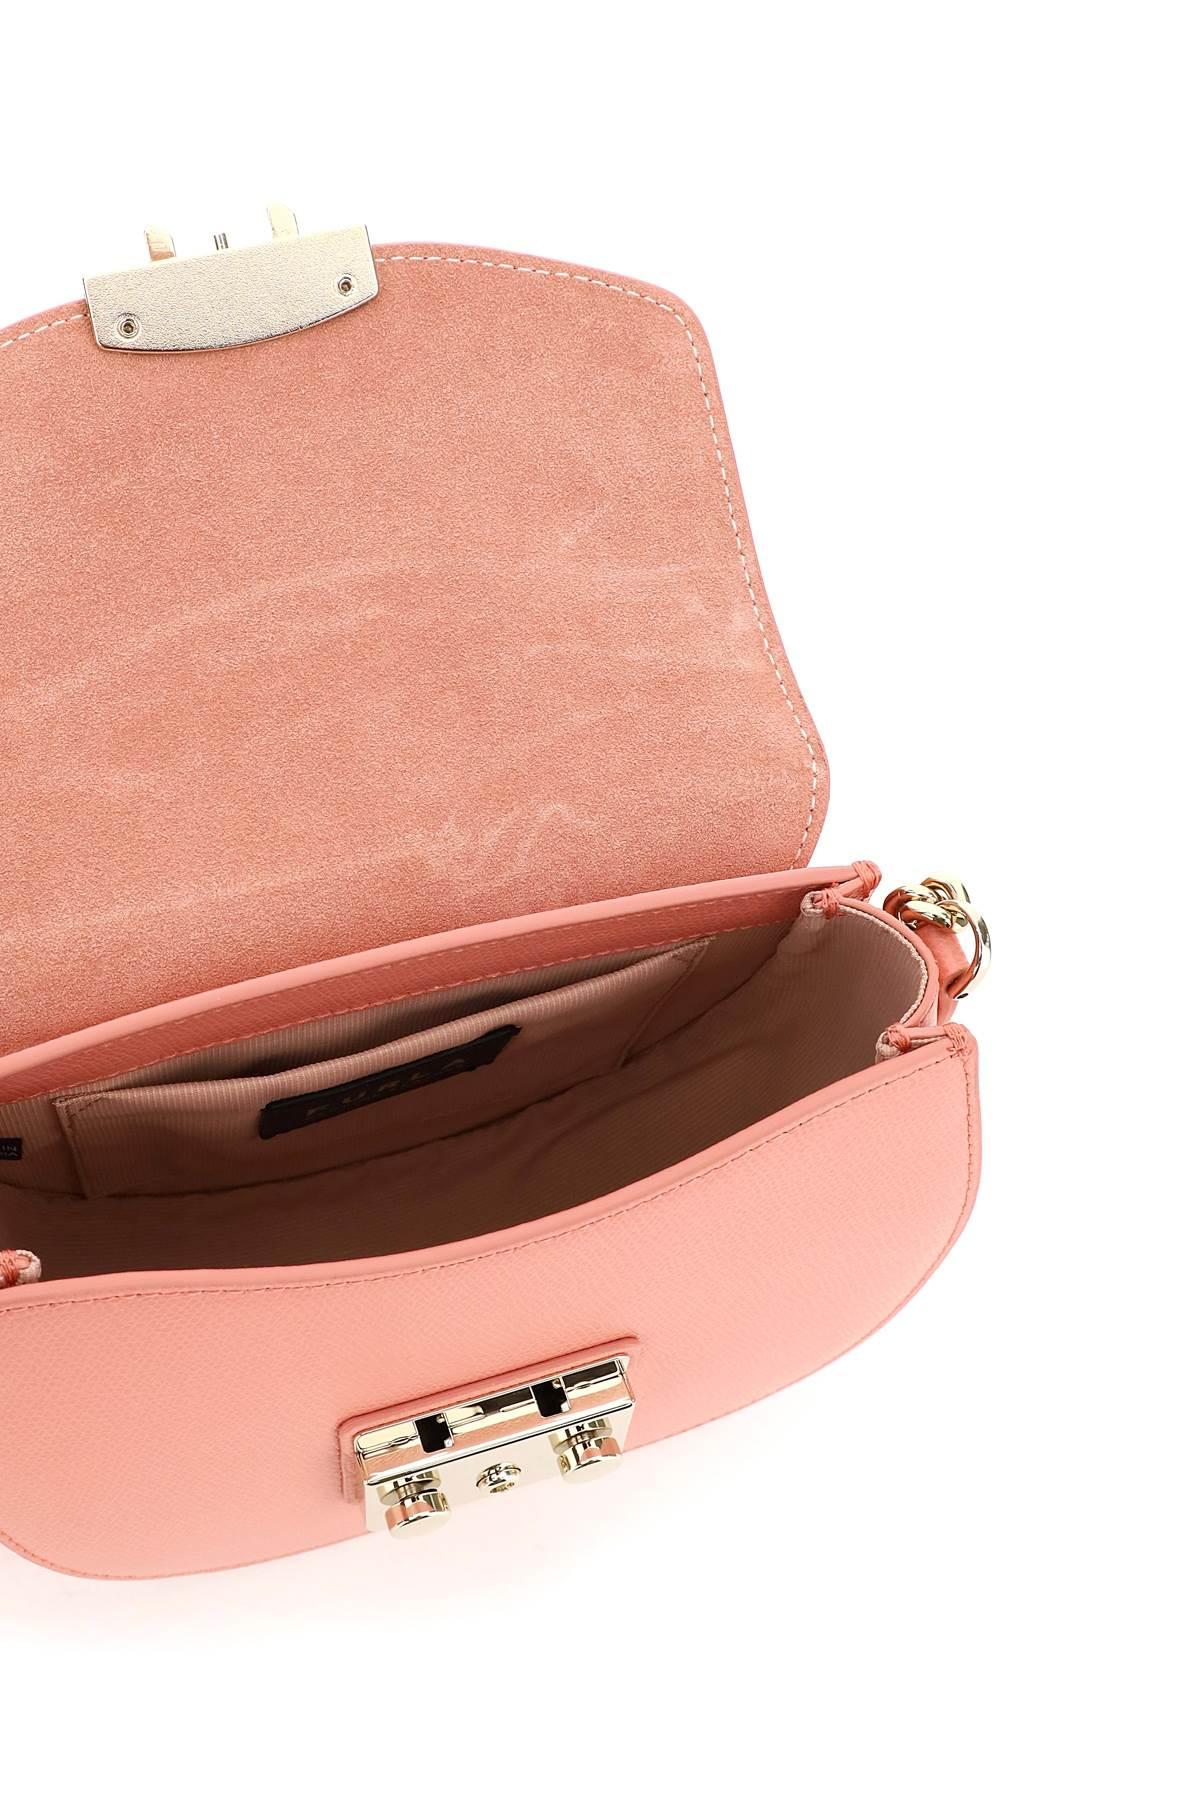 Furla Leather Metropolis Crossbody Mini Bag in Pink | Lyst